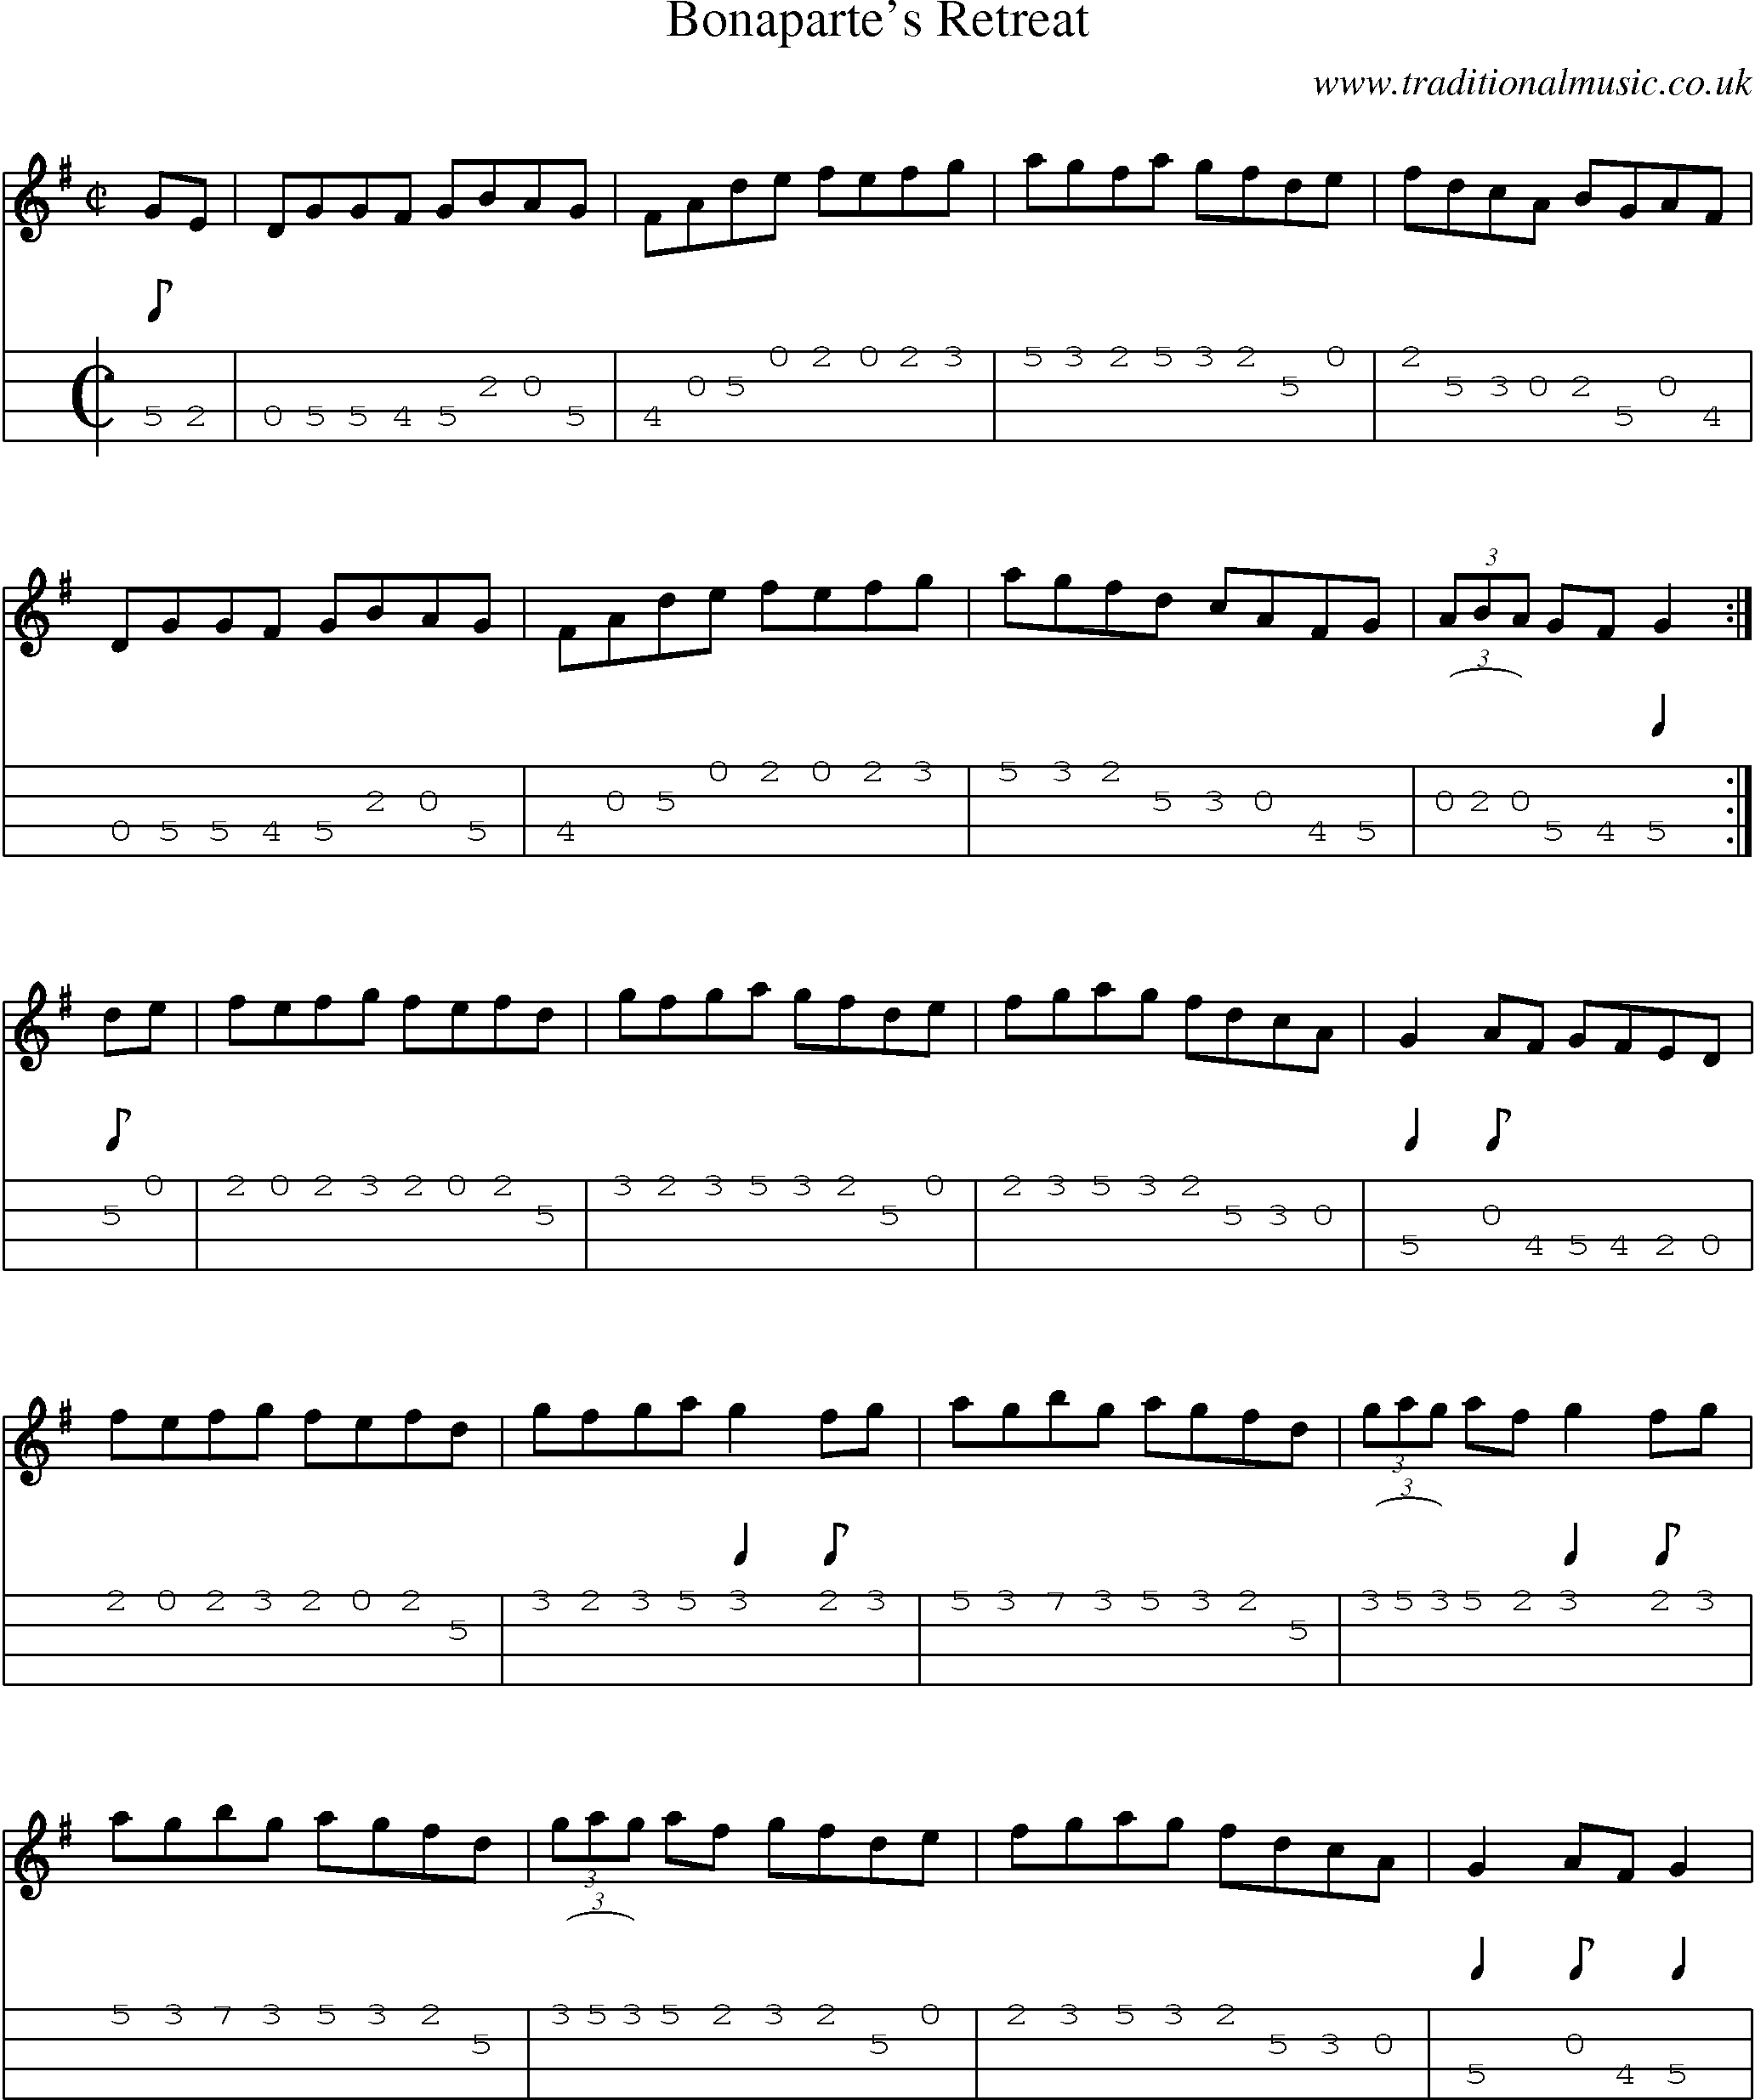 Music Score and Mandolin Tabs for Bonapartes Retreat